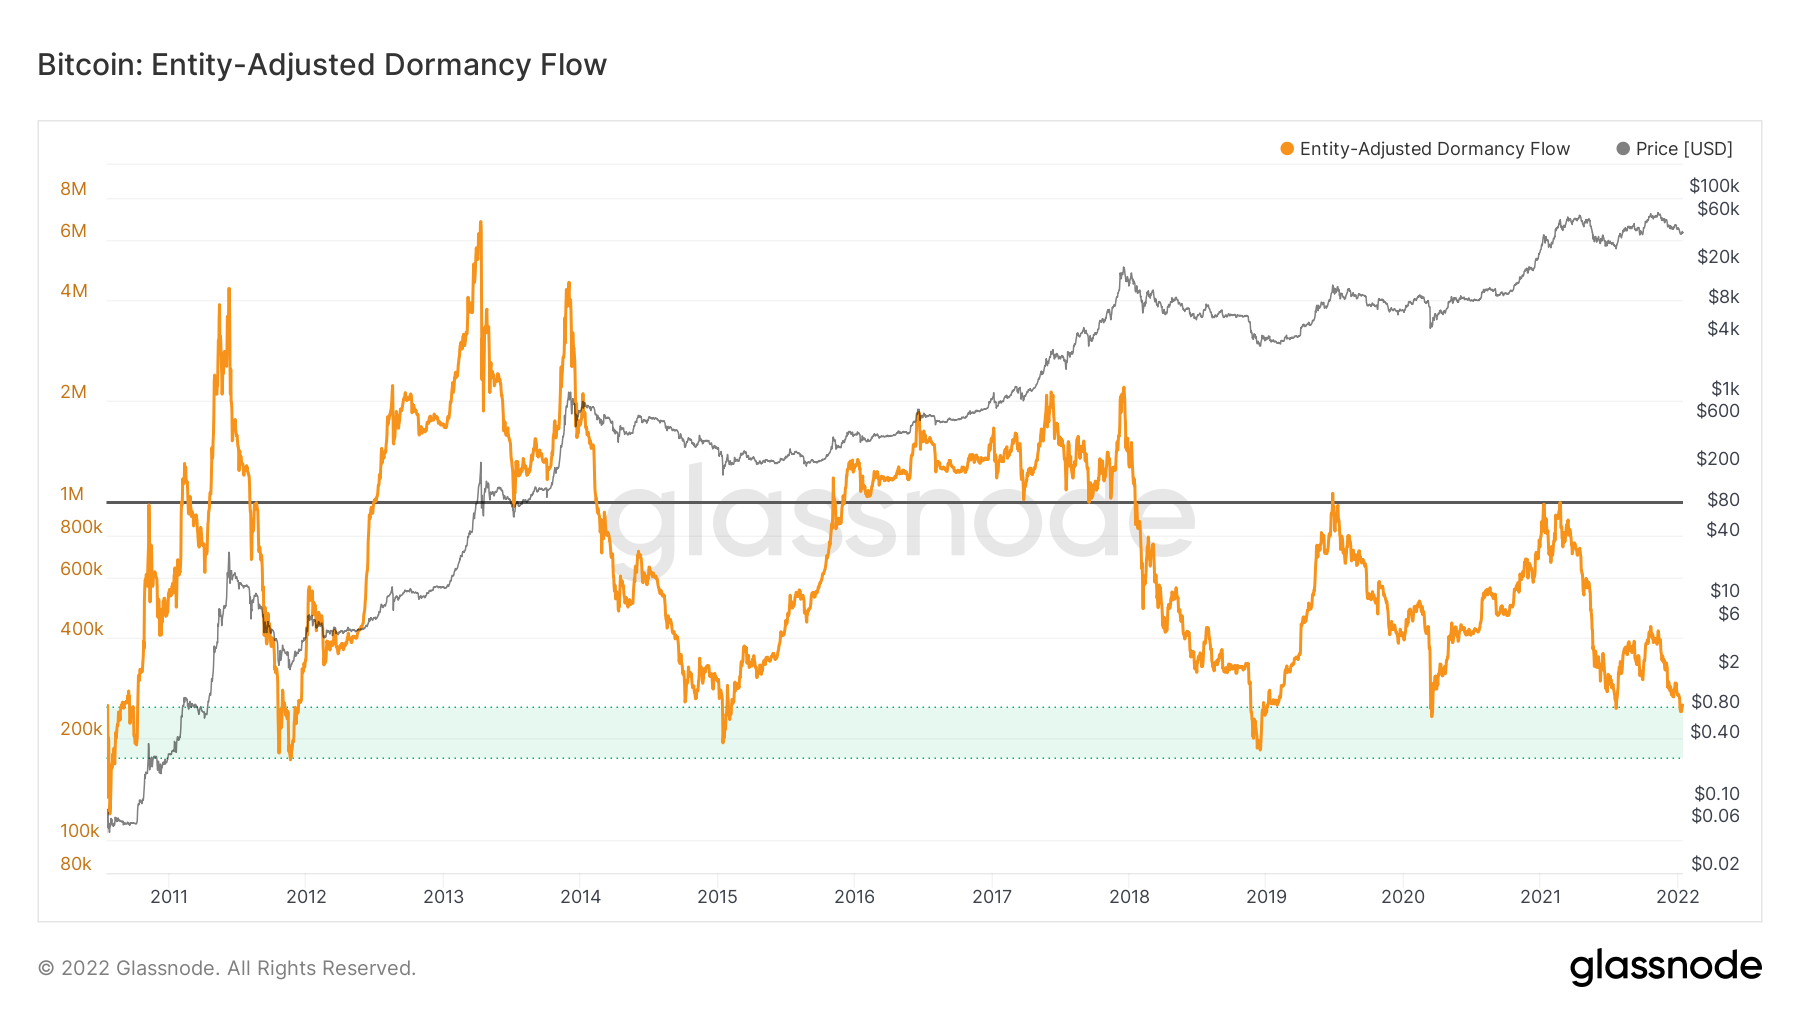 BTC entity-adjusted dormancy flow